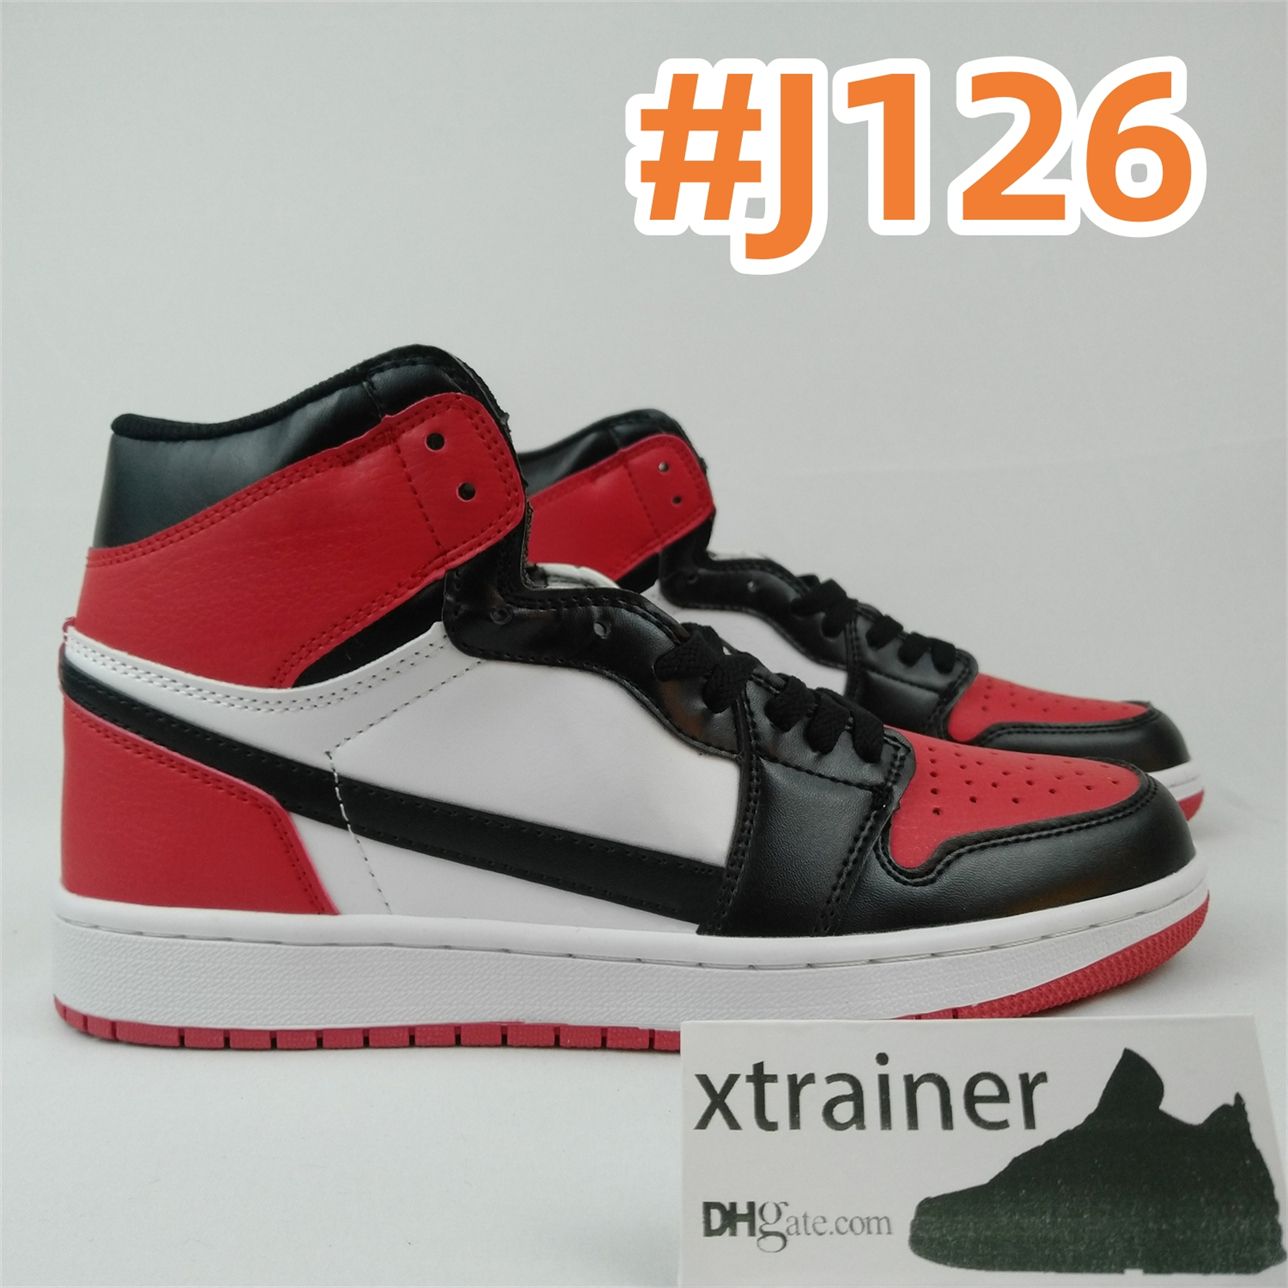 #J126